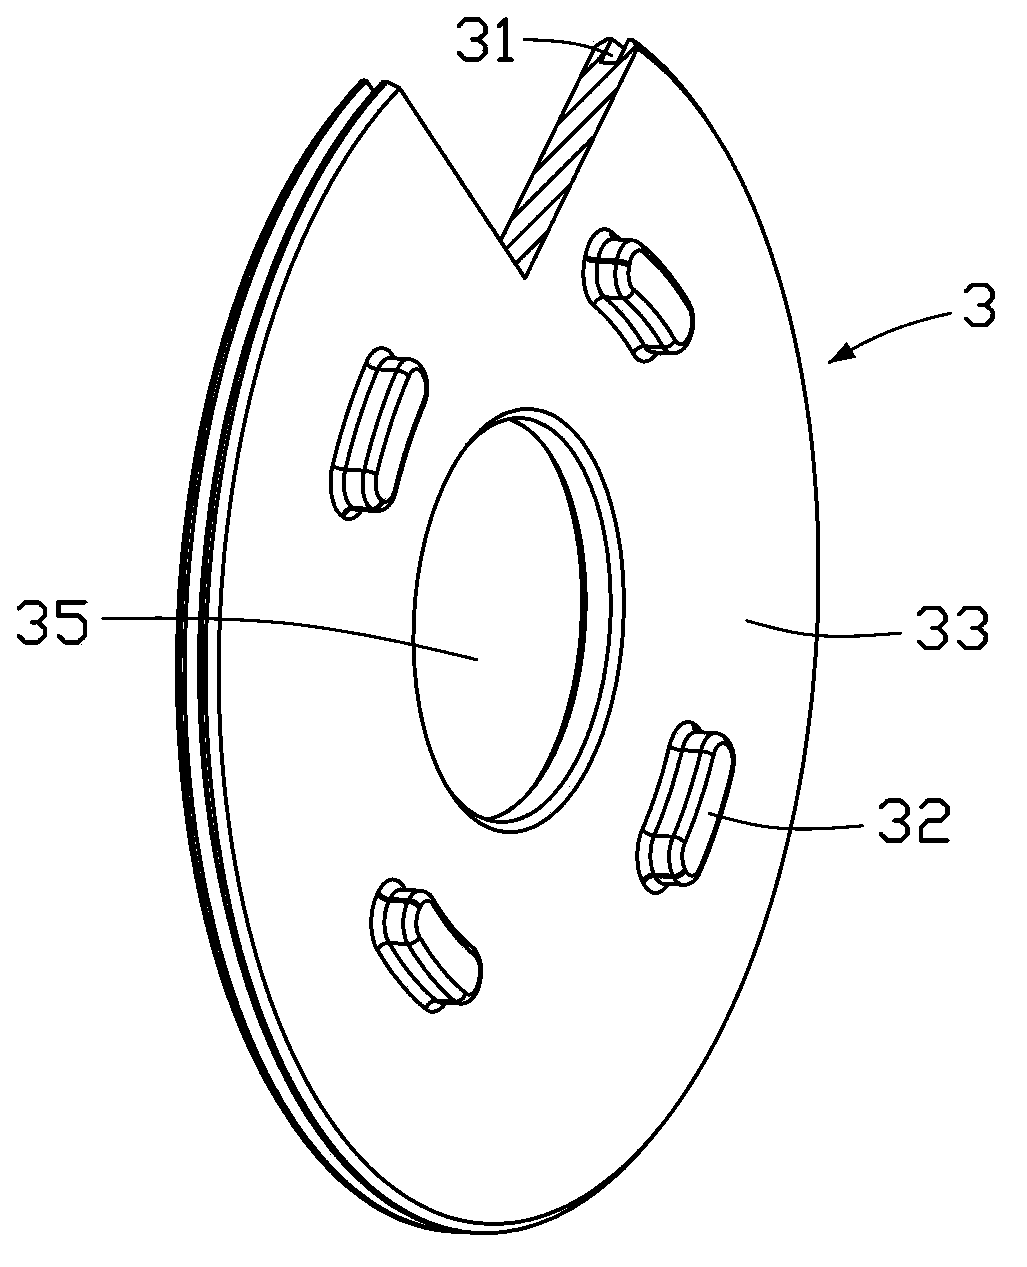 Variable inertia flywheel structure